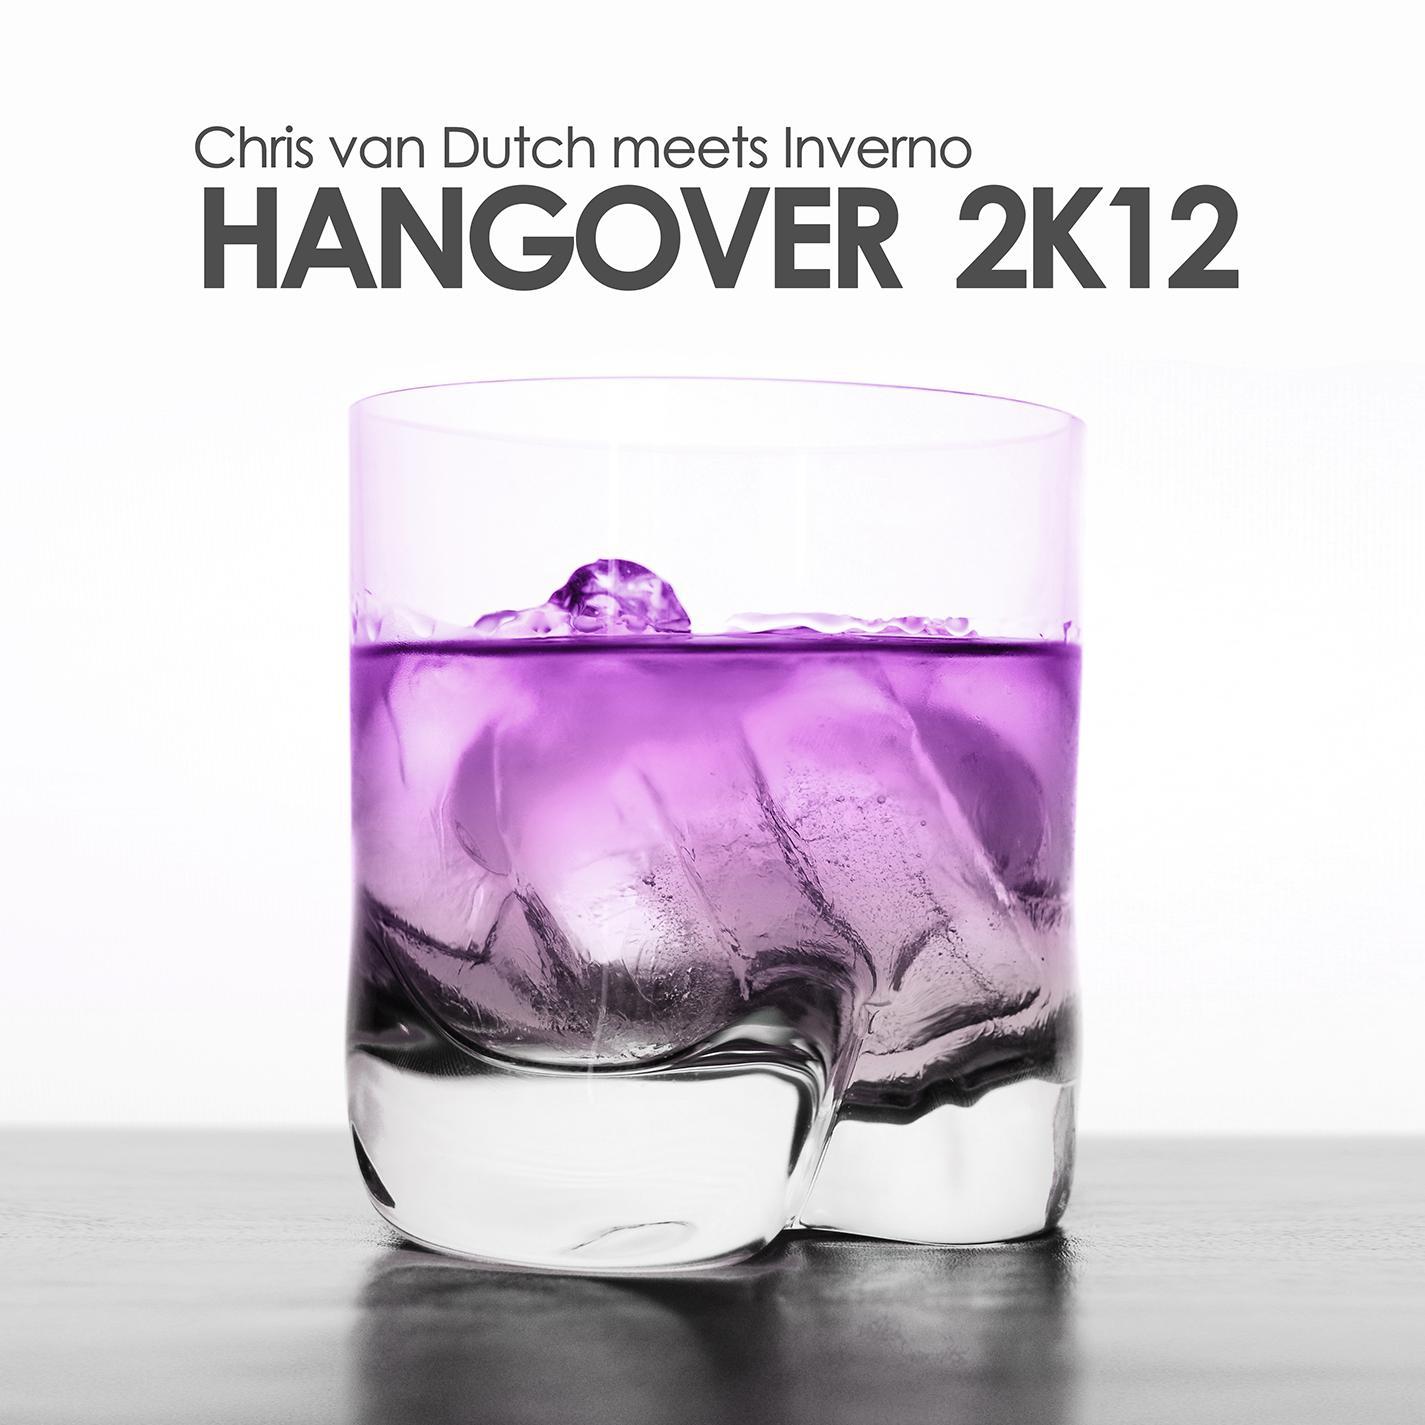 Chris Van Dutch - Hangover 2k12 (Chris van Dutch meets Inverno) (Extended Mix)